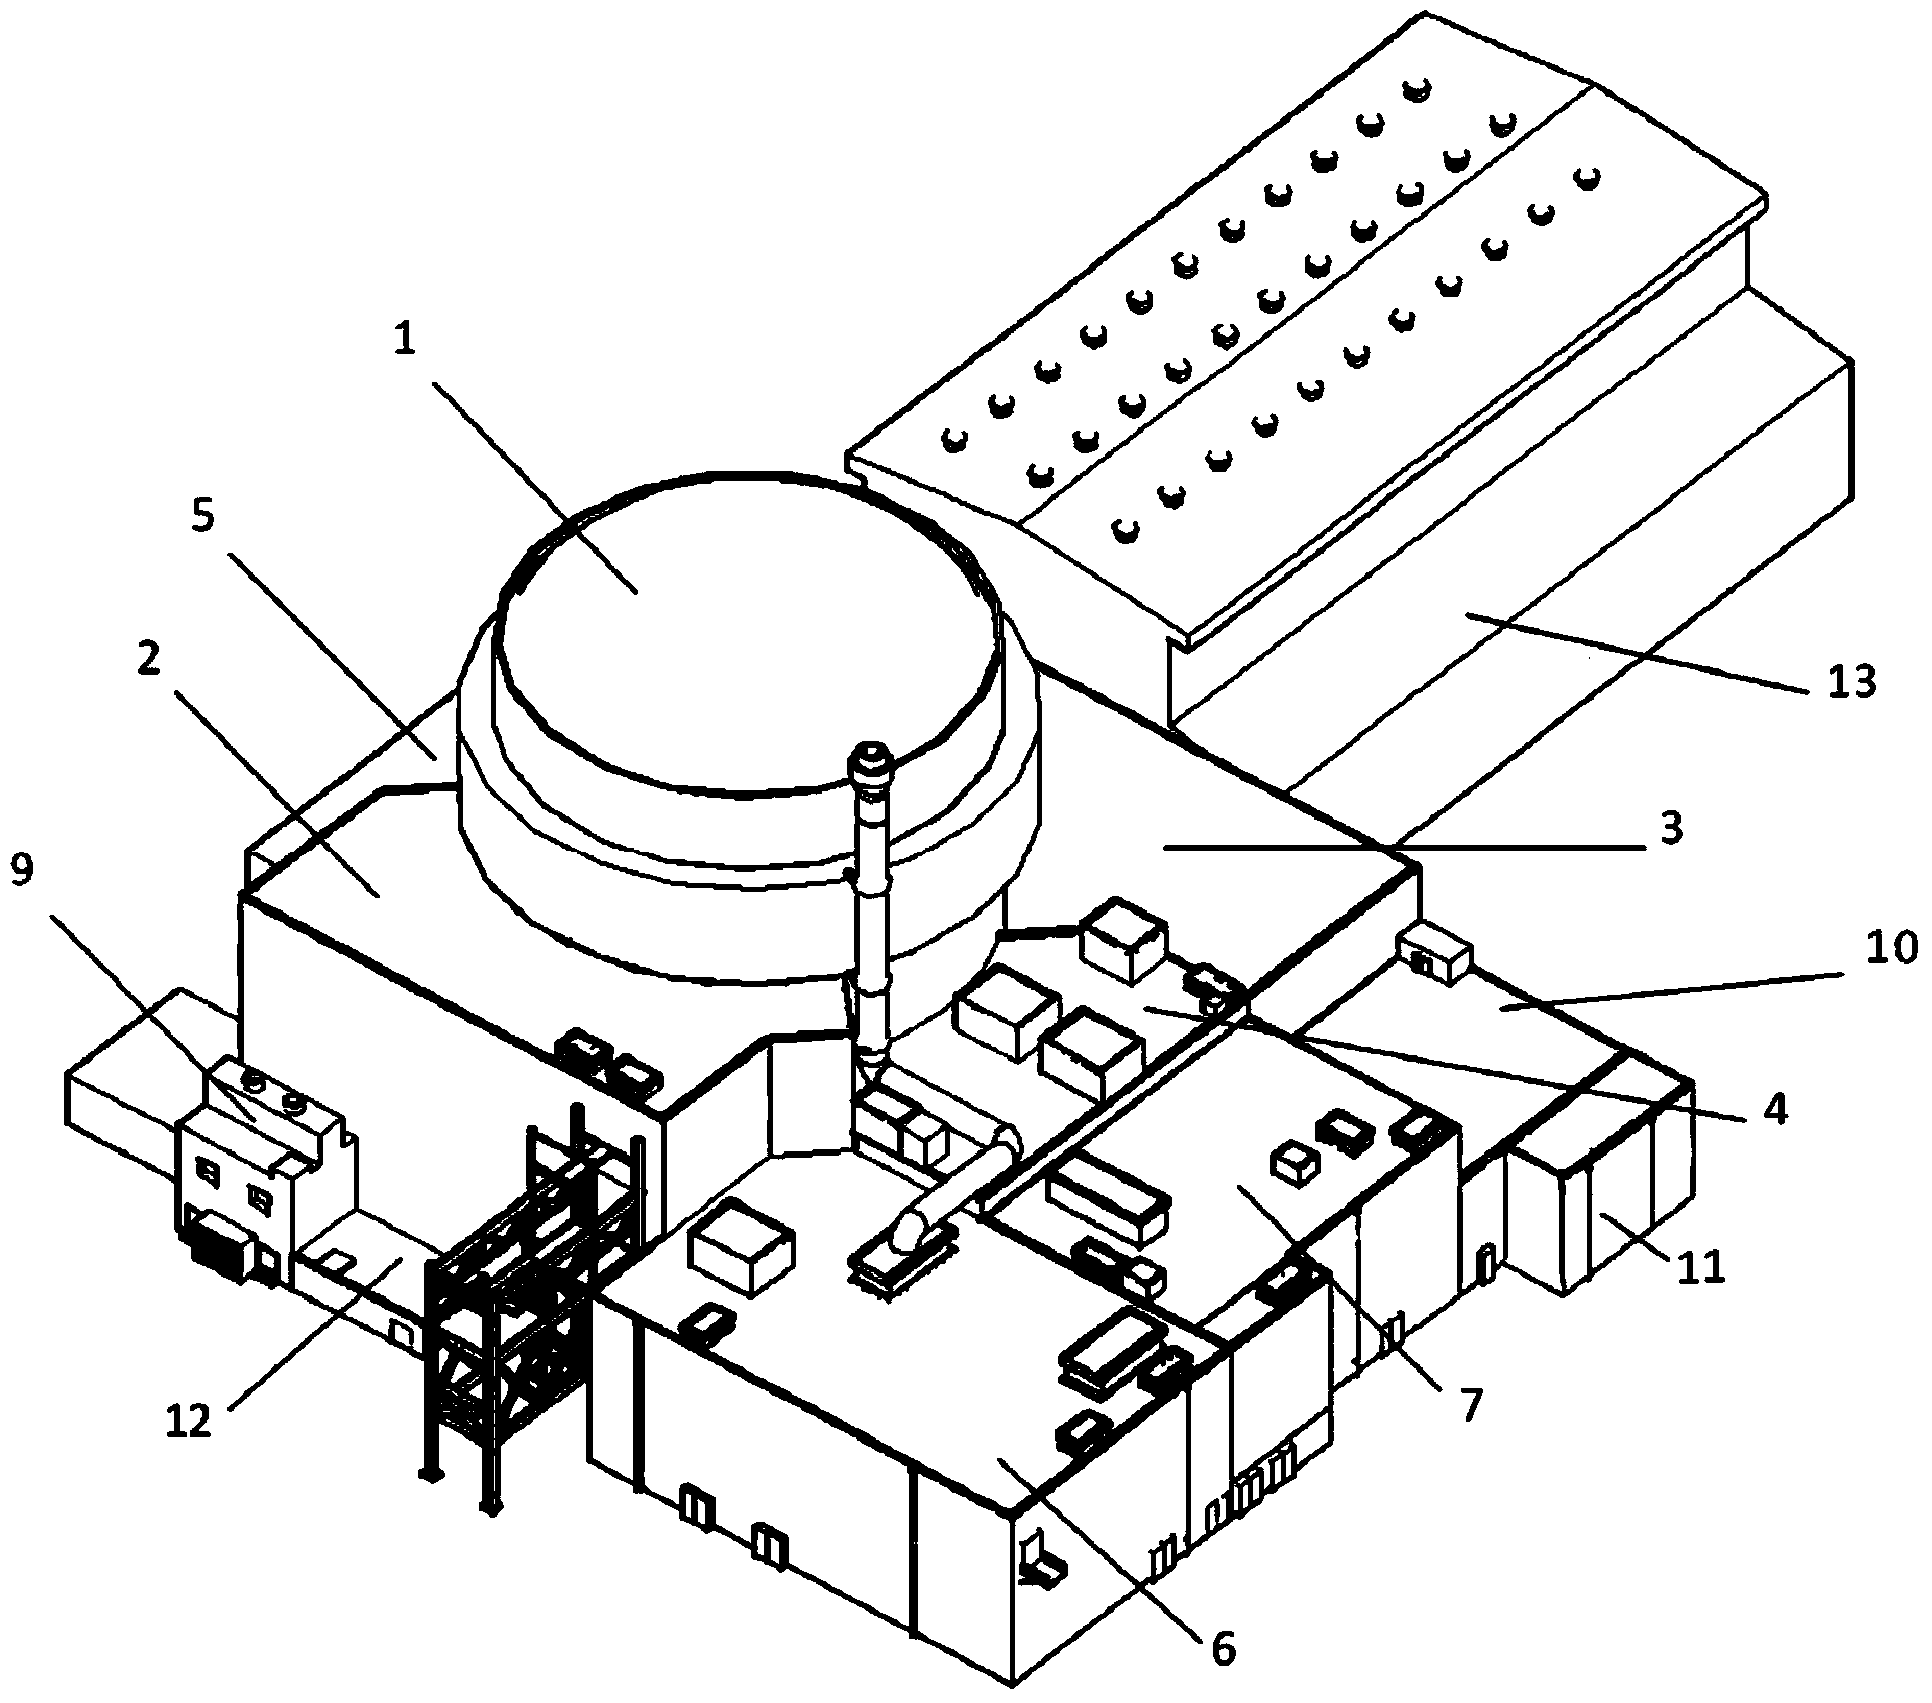 Main machine hall group arrangement method of nuclear power plant